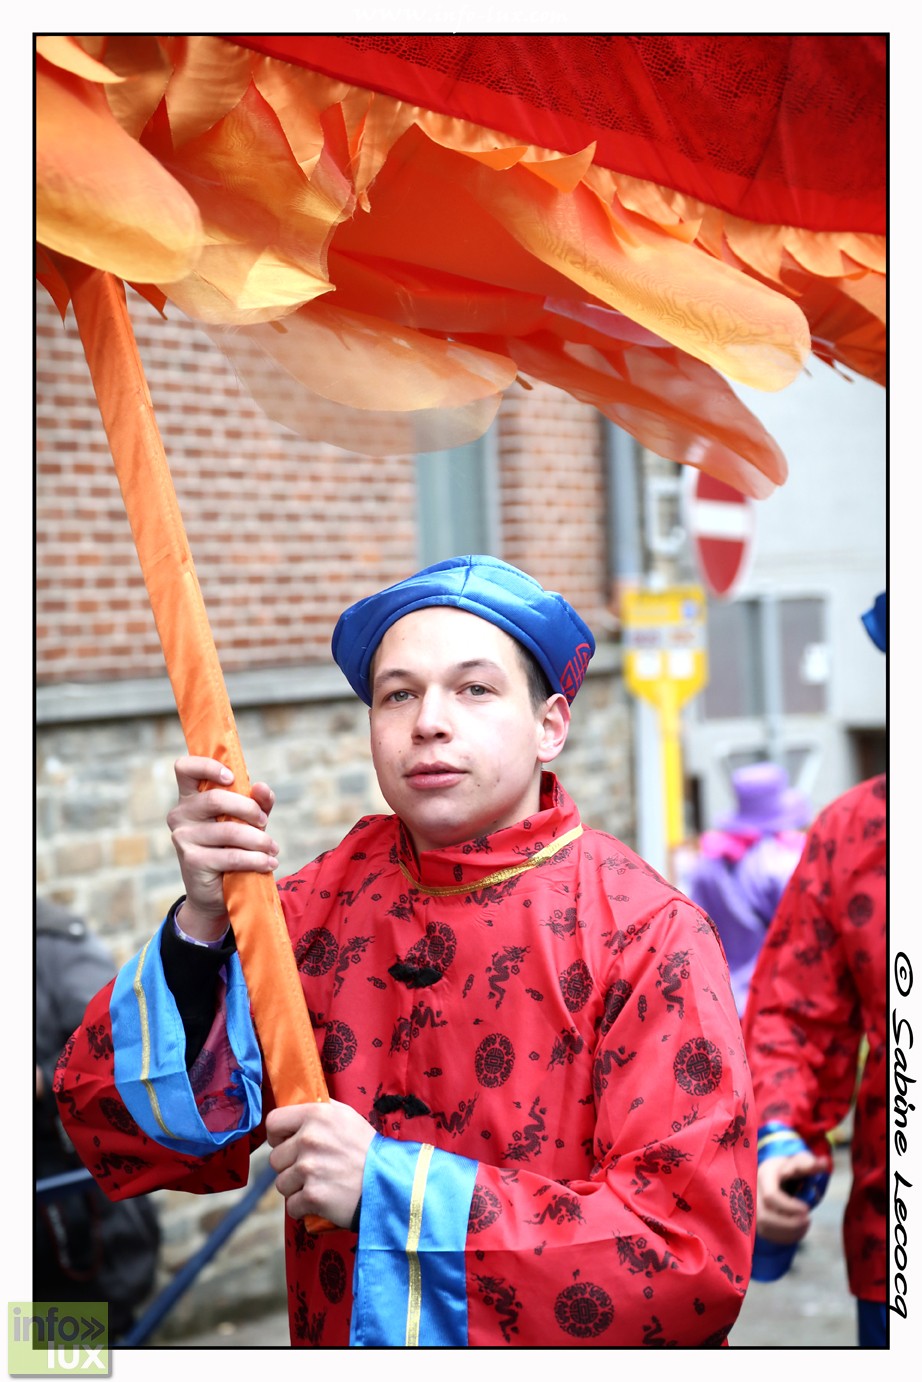 images/stories/PHOTOSREP/La-Roche-en-Ardenne/Carnaval2/Carnaval-larocheb054